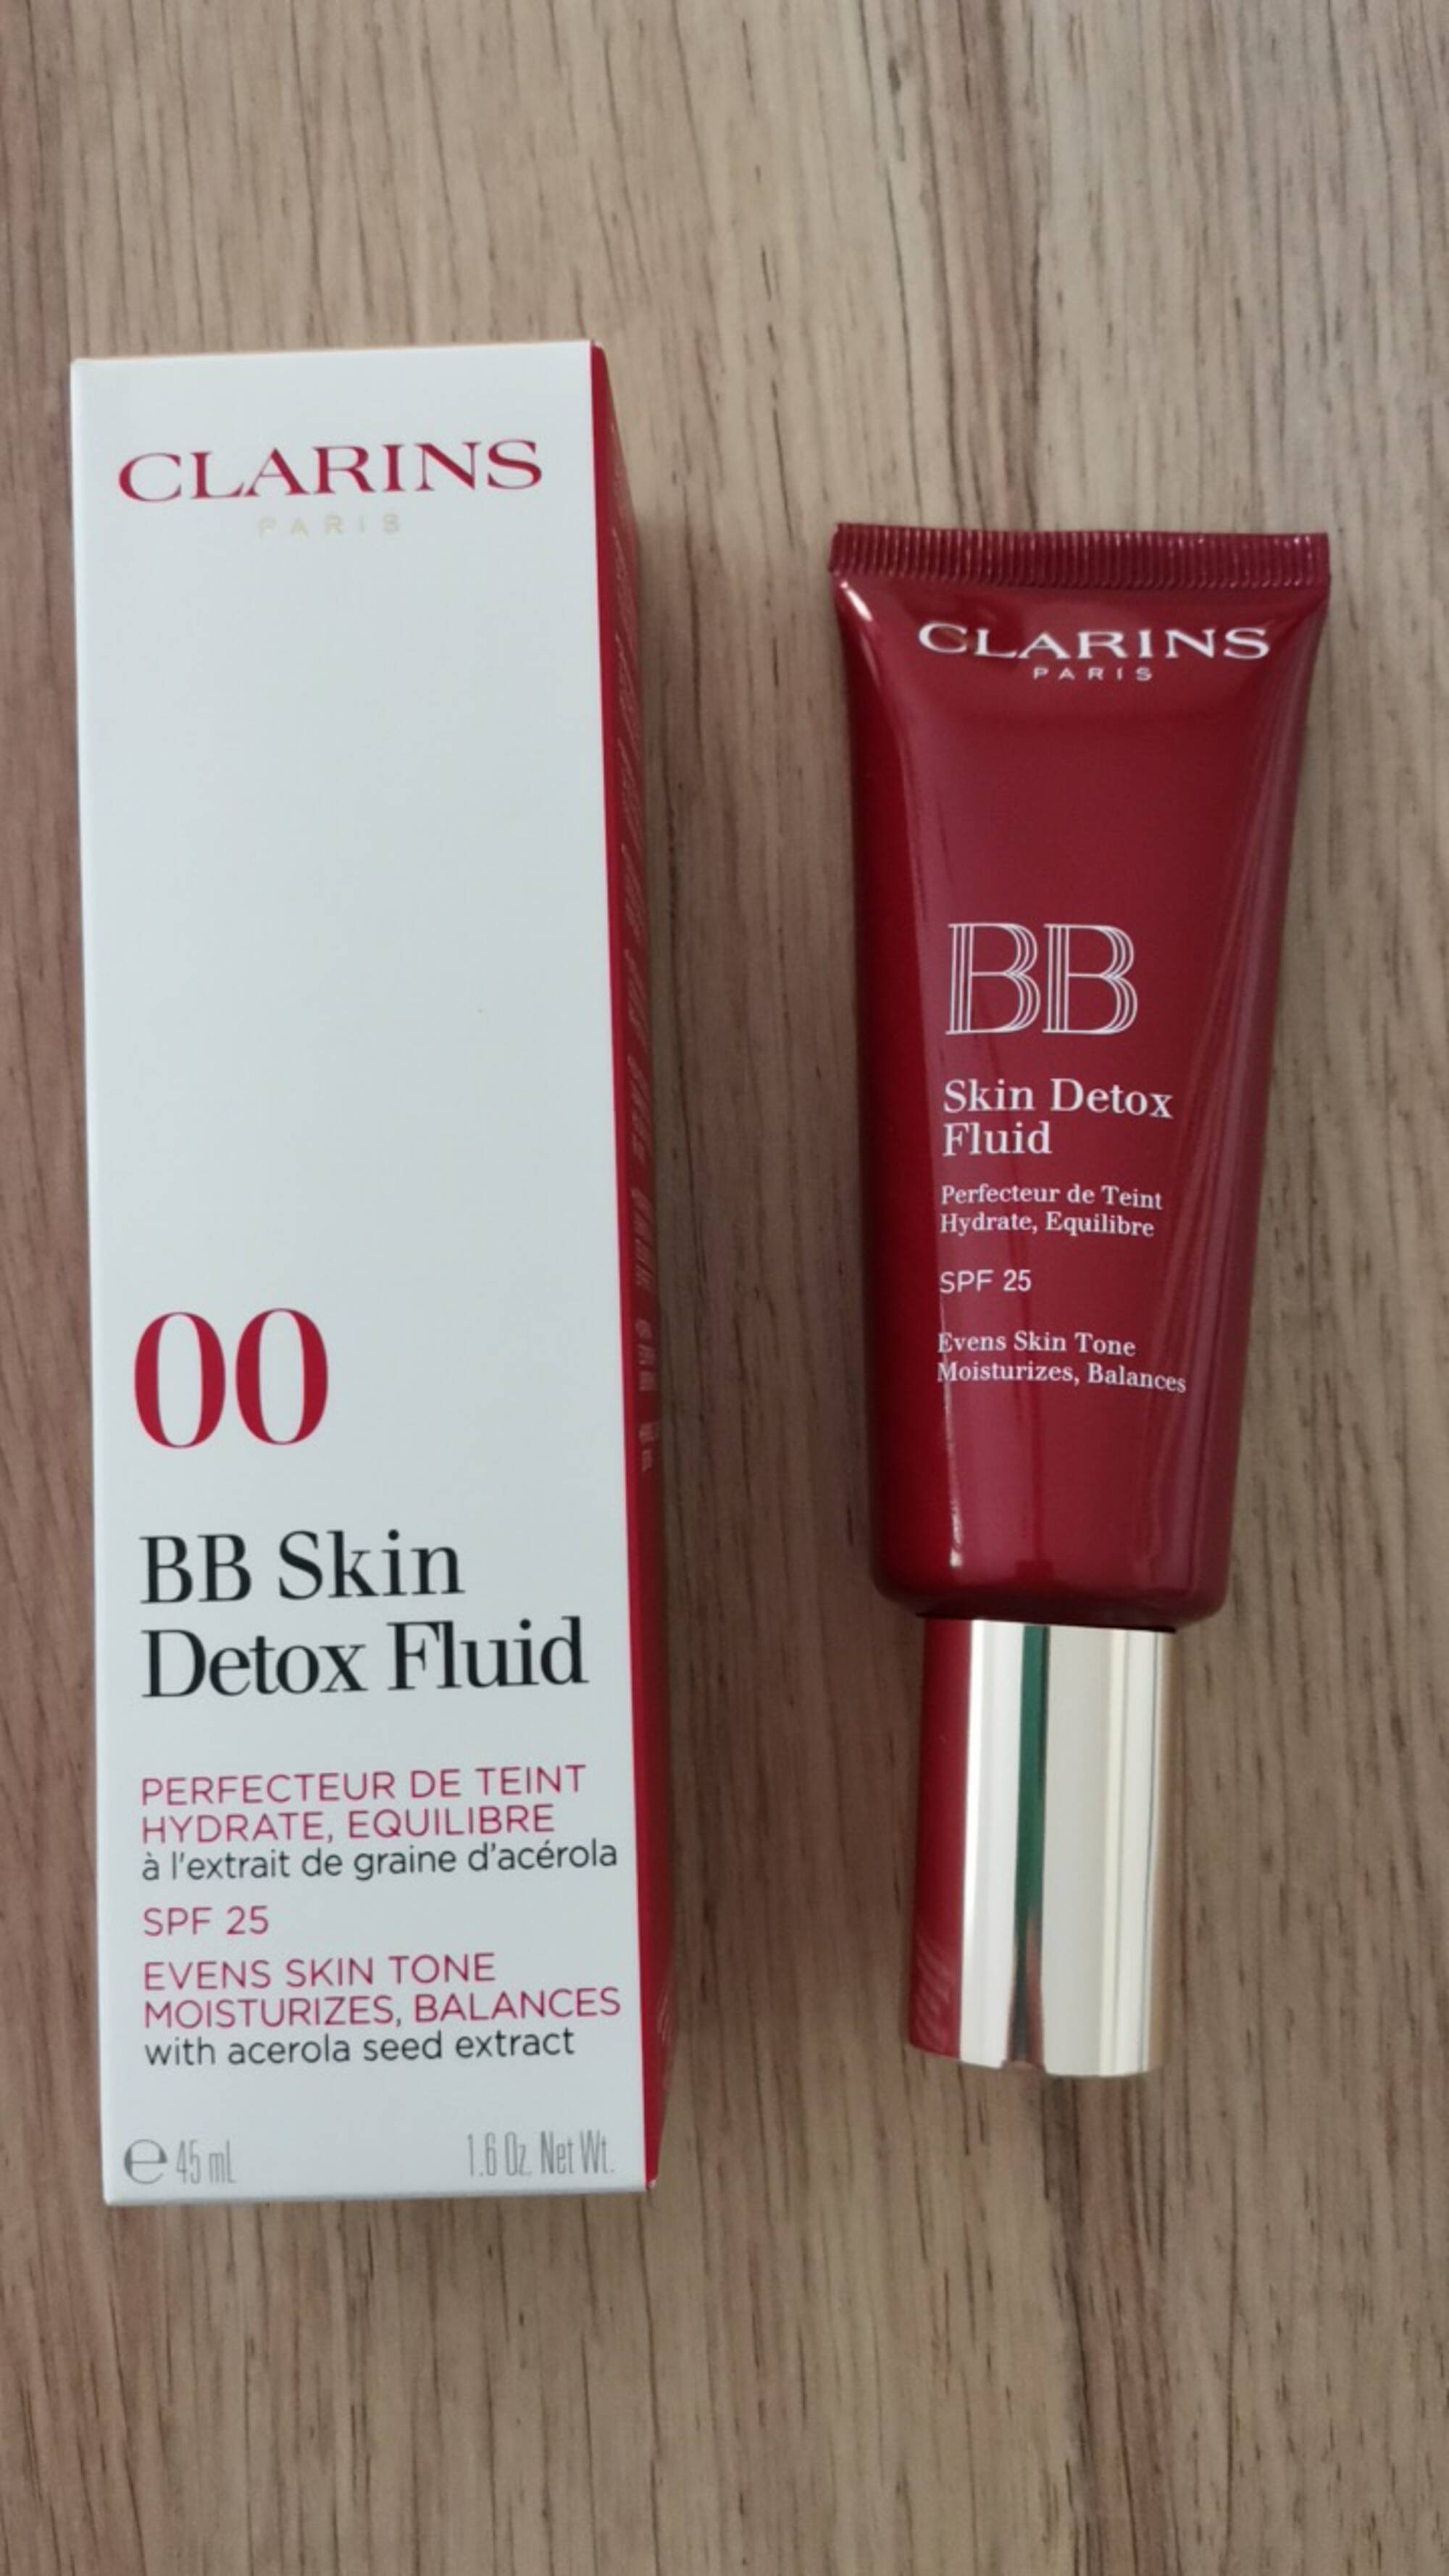 CLARINS - 00 - BB skin detox fluid SPF 25